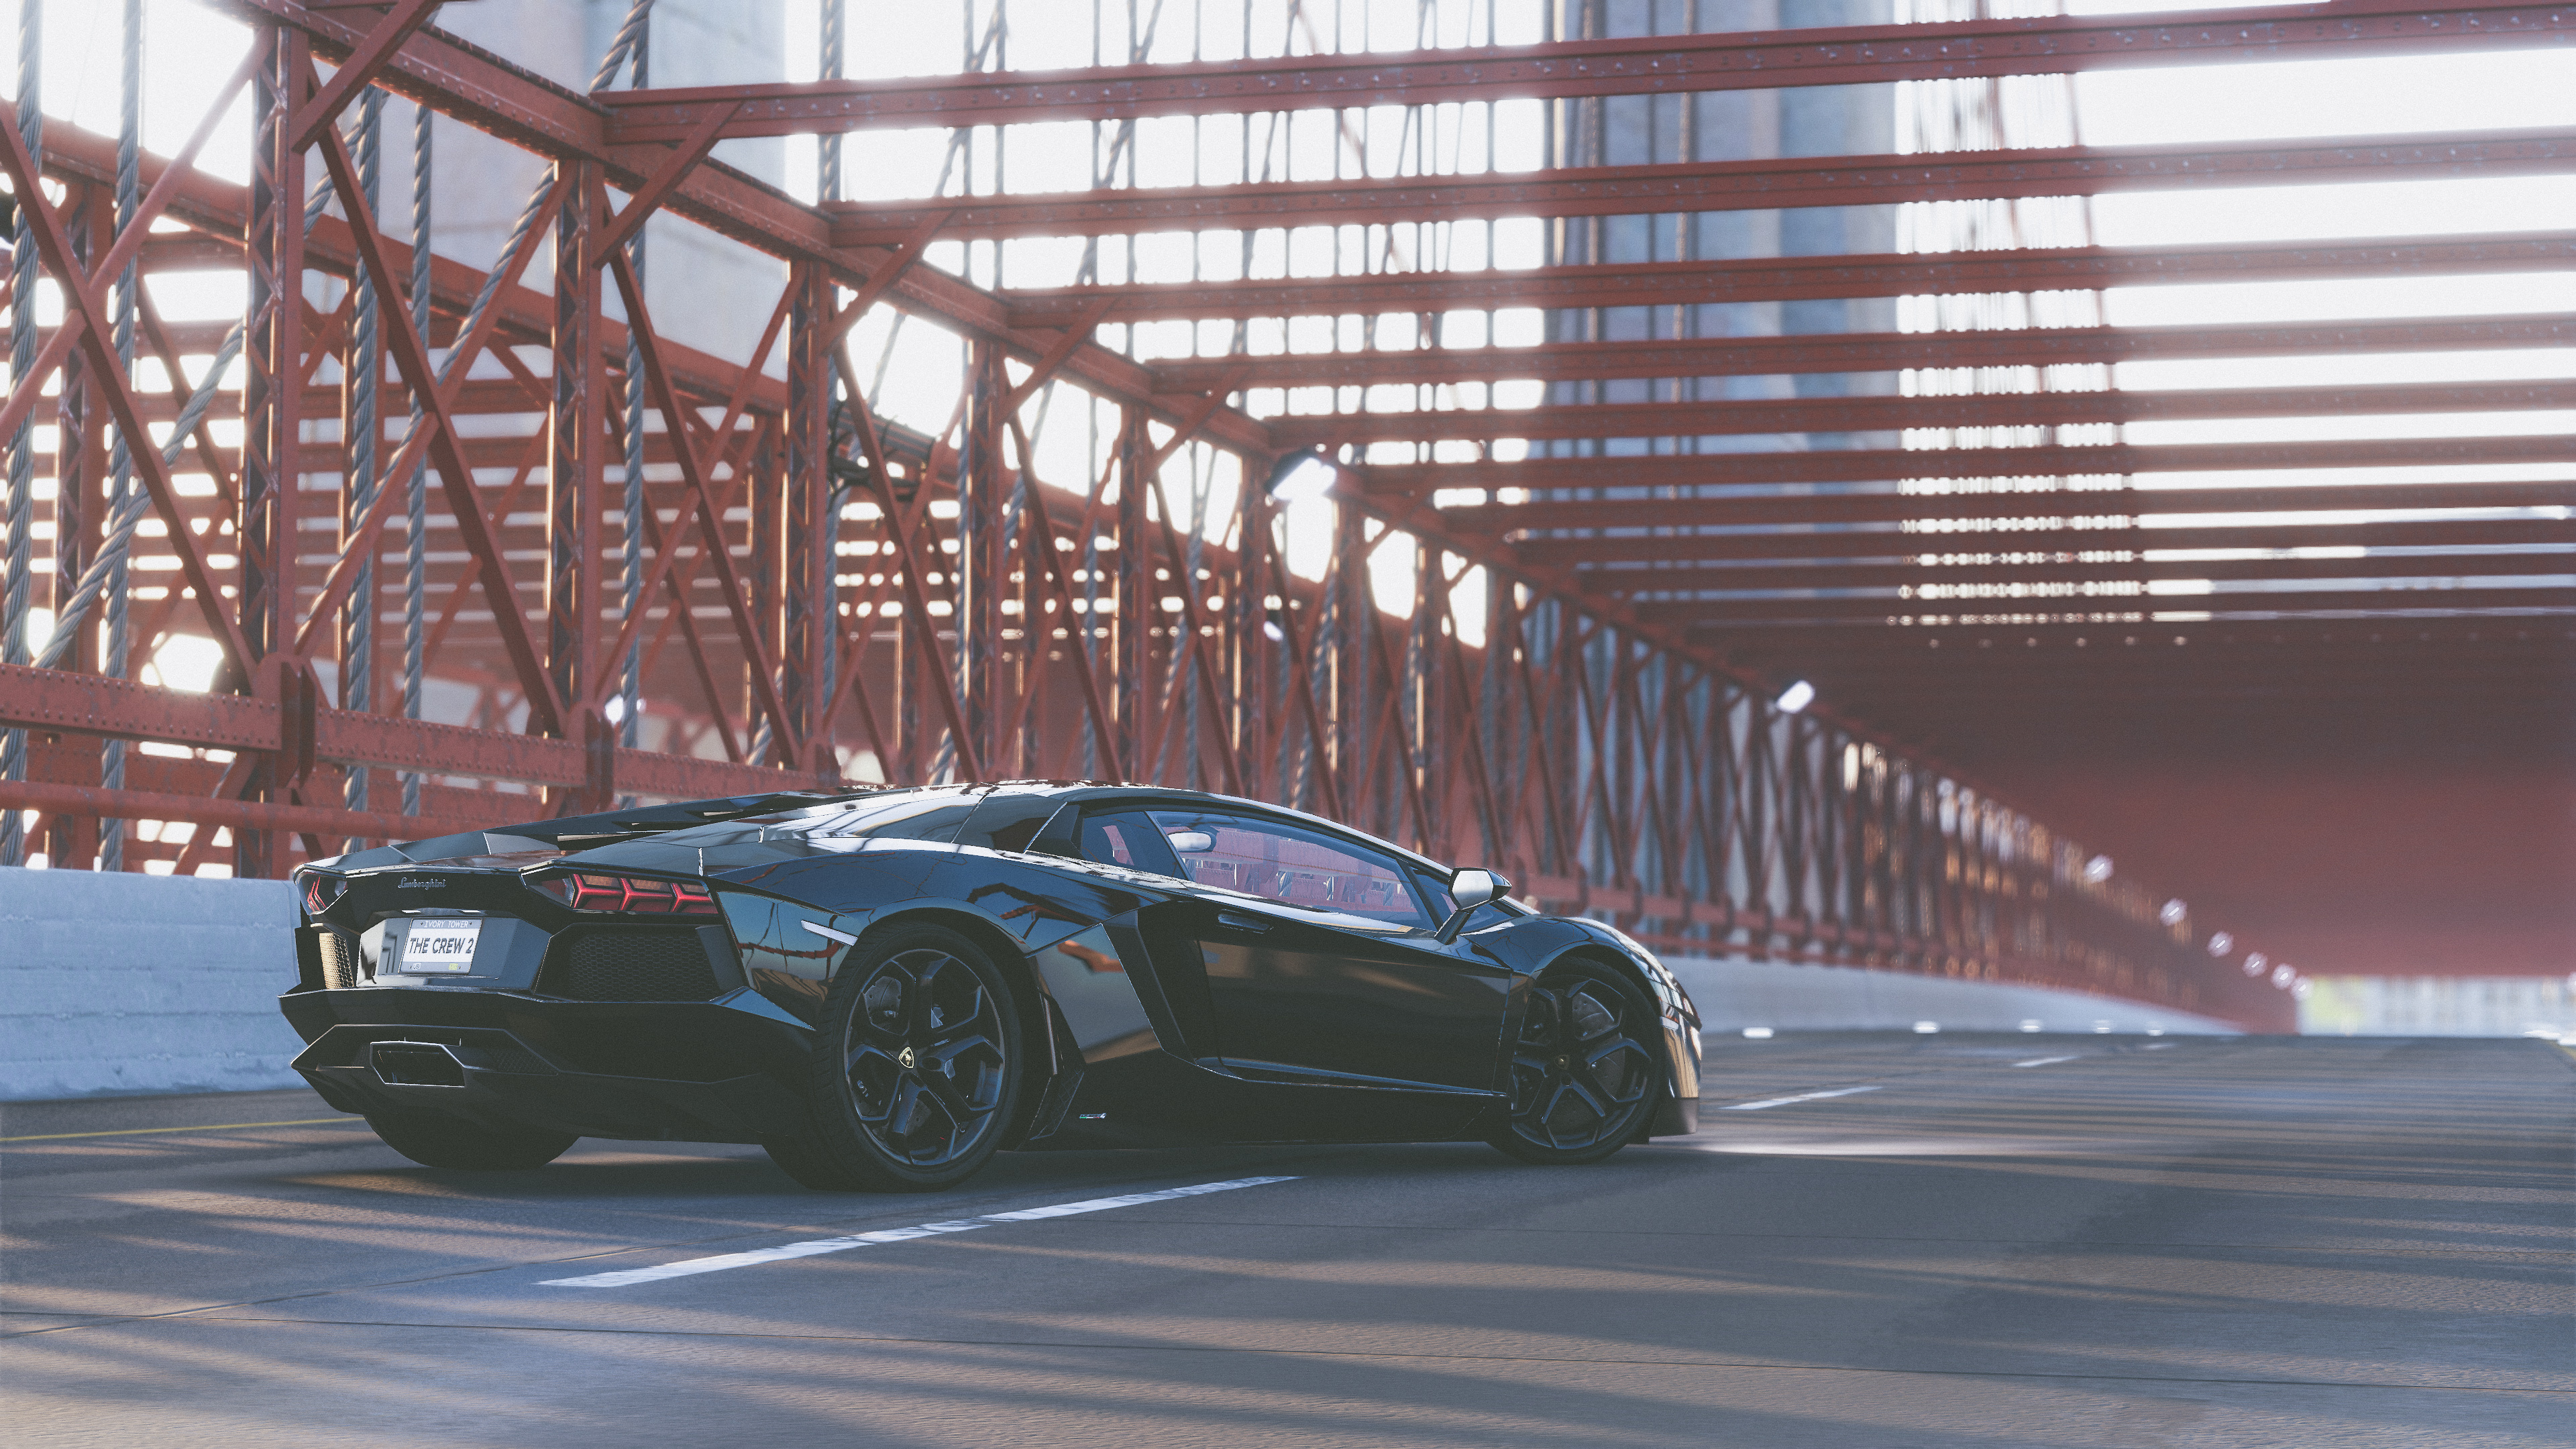 The Crew 2 Lamborghini Aventador, Racing game, High-speed chase, Adrenaline rush, 3840x2160 4K Desktop